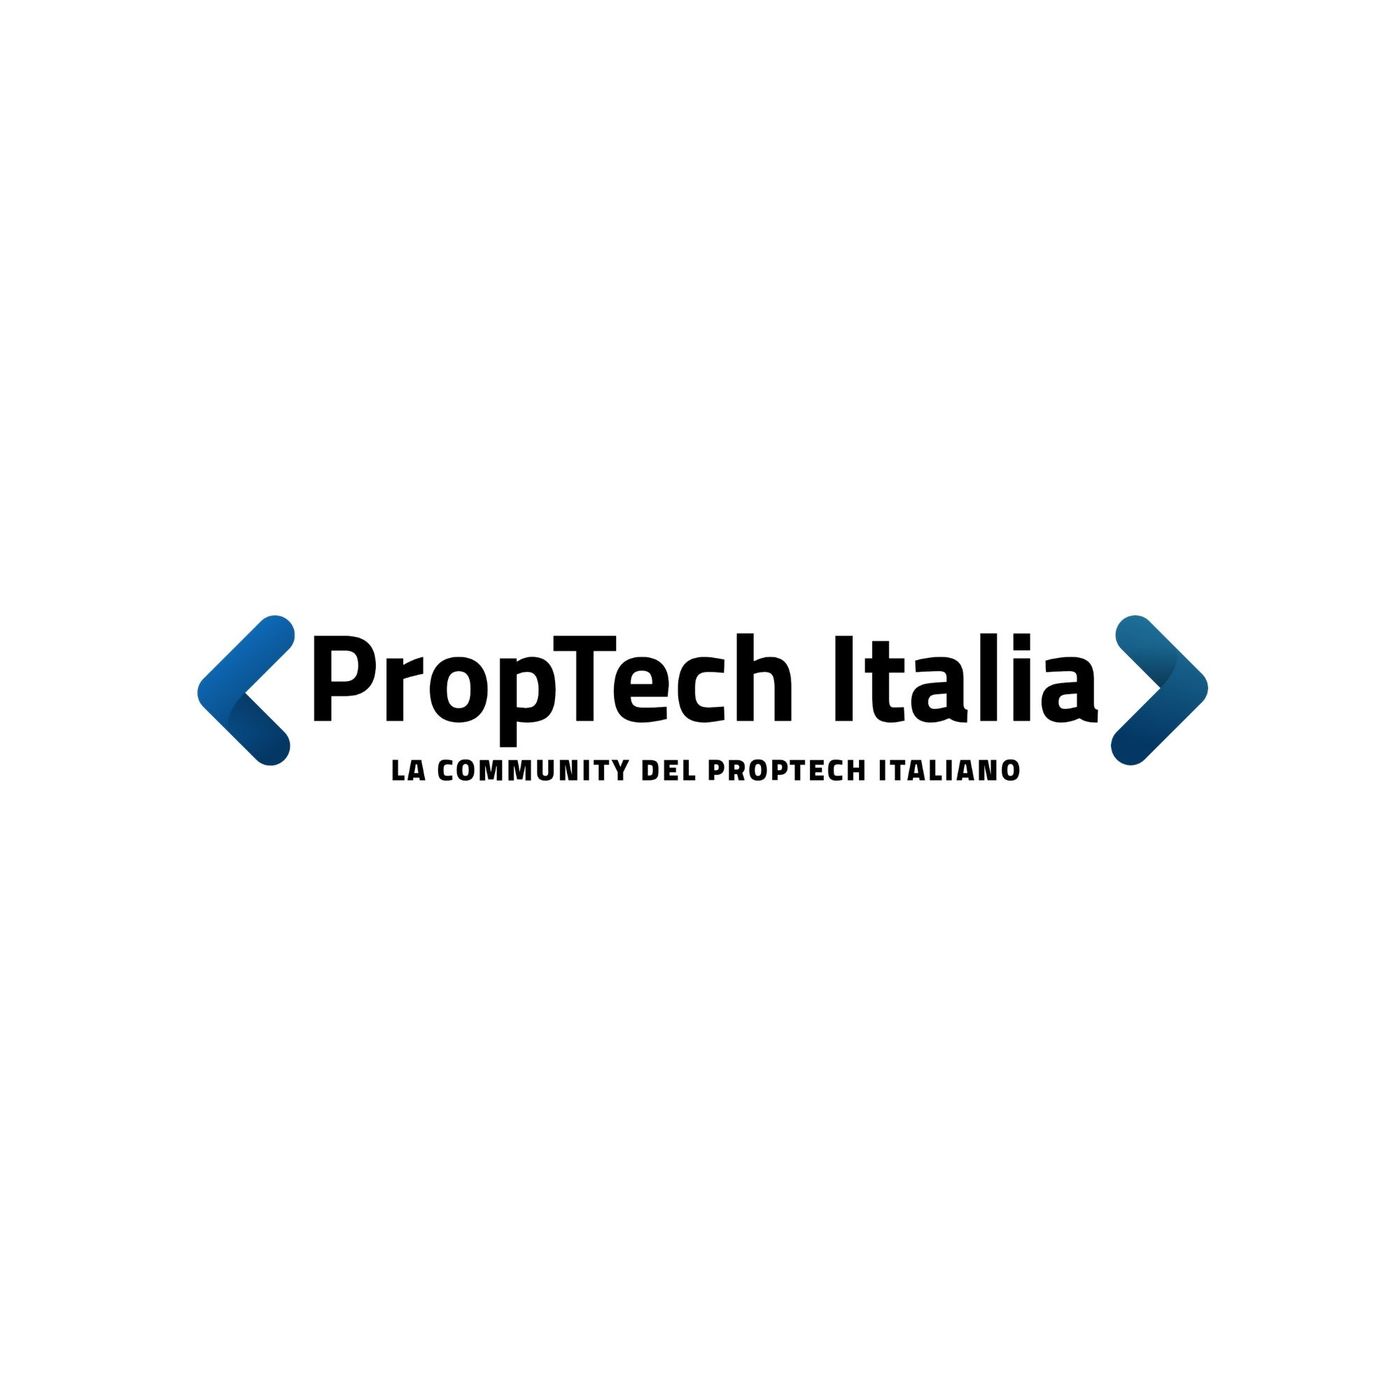 PropTech Italia